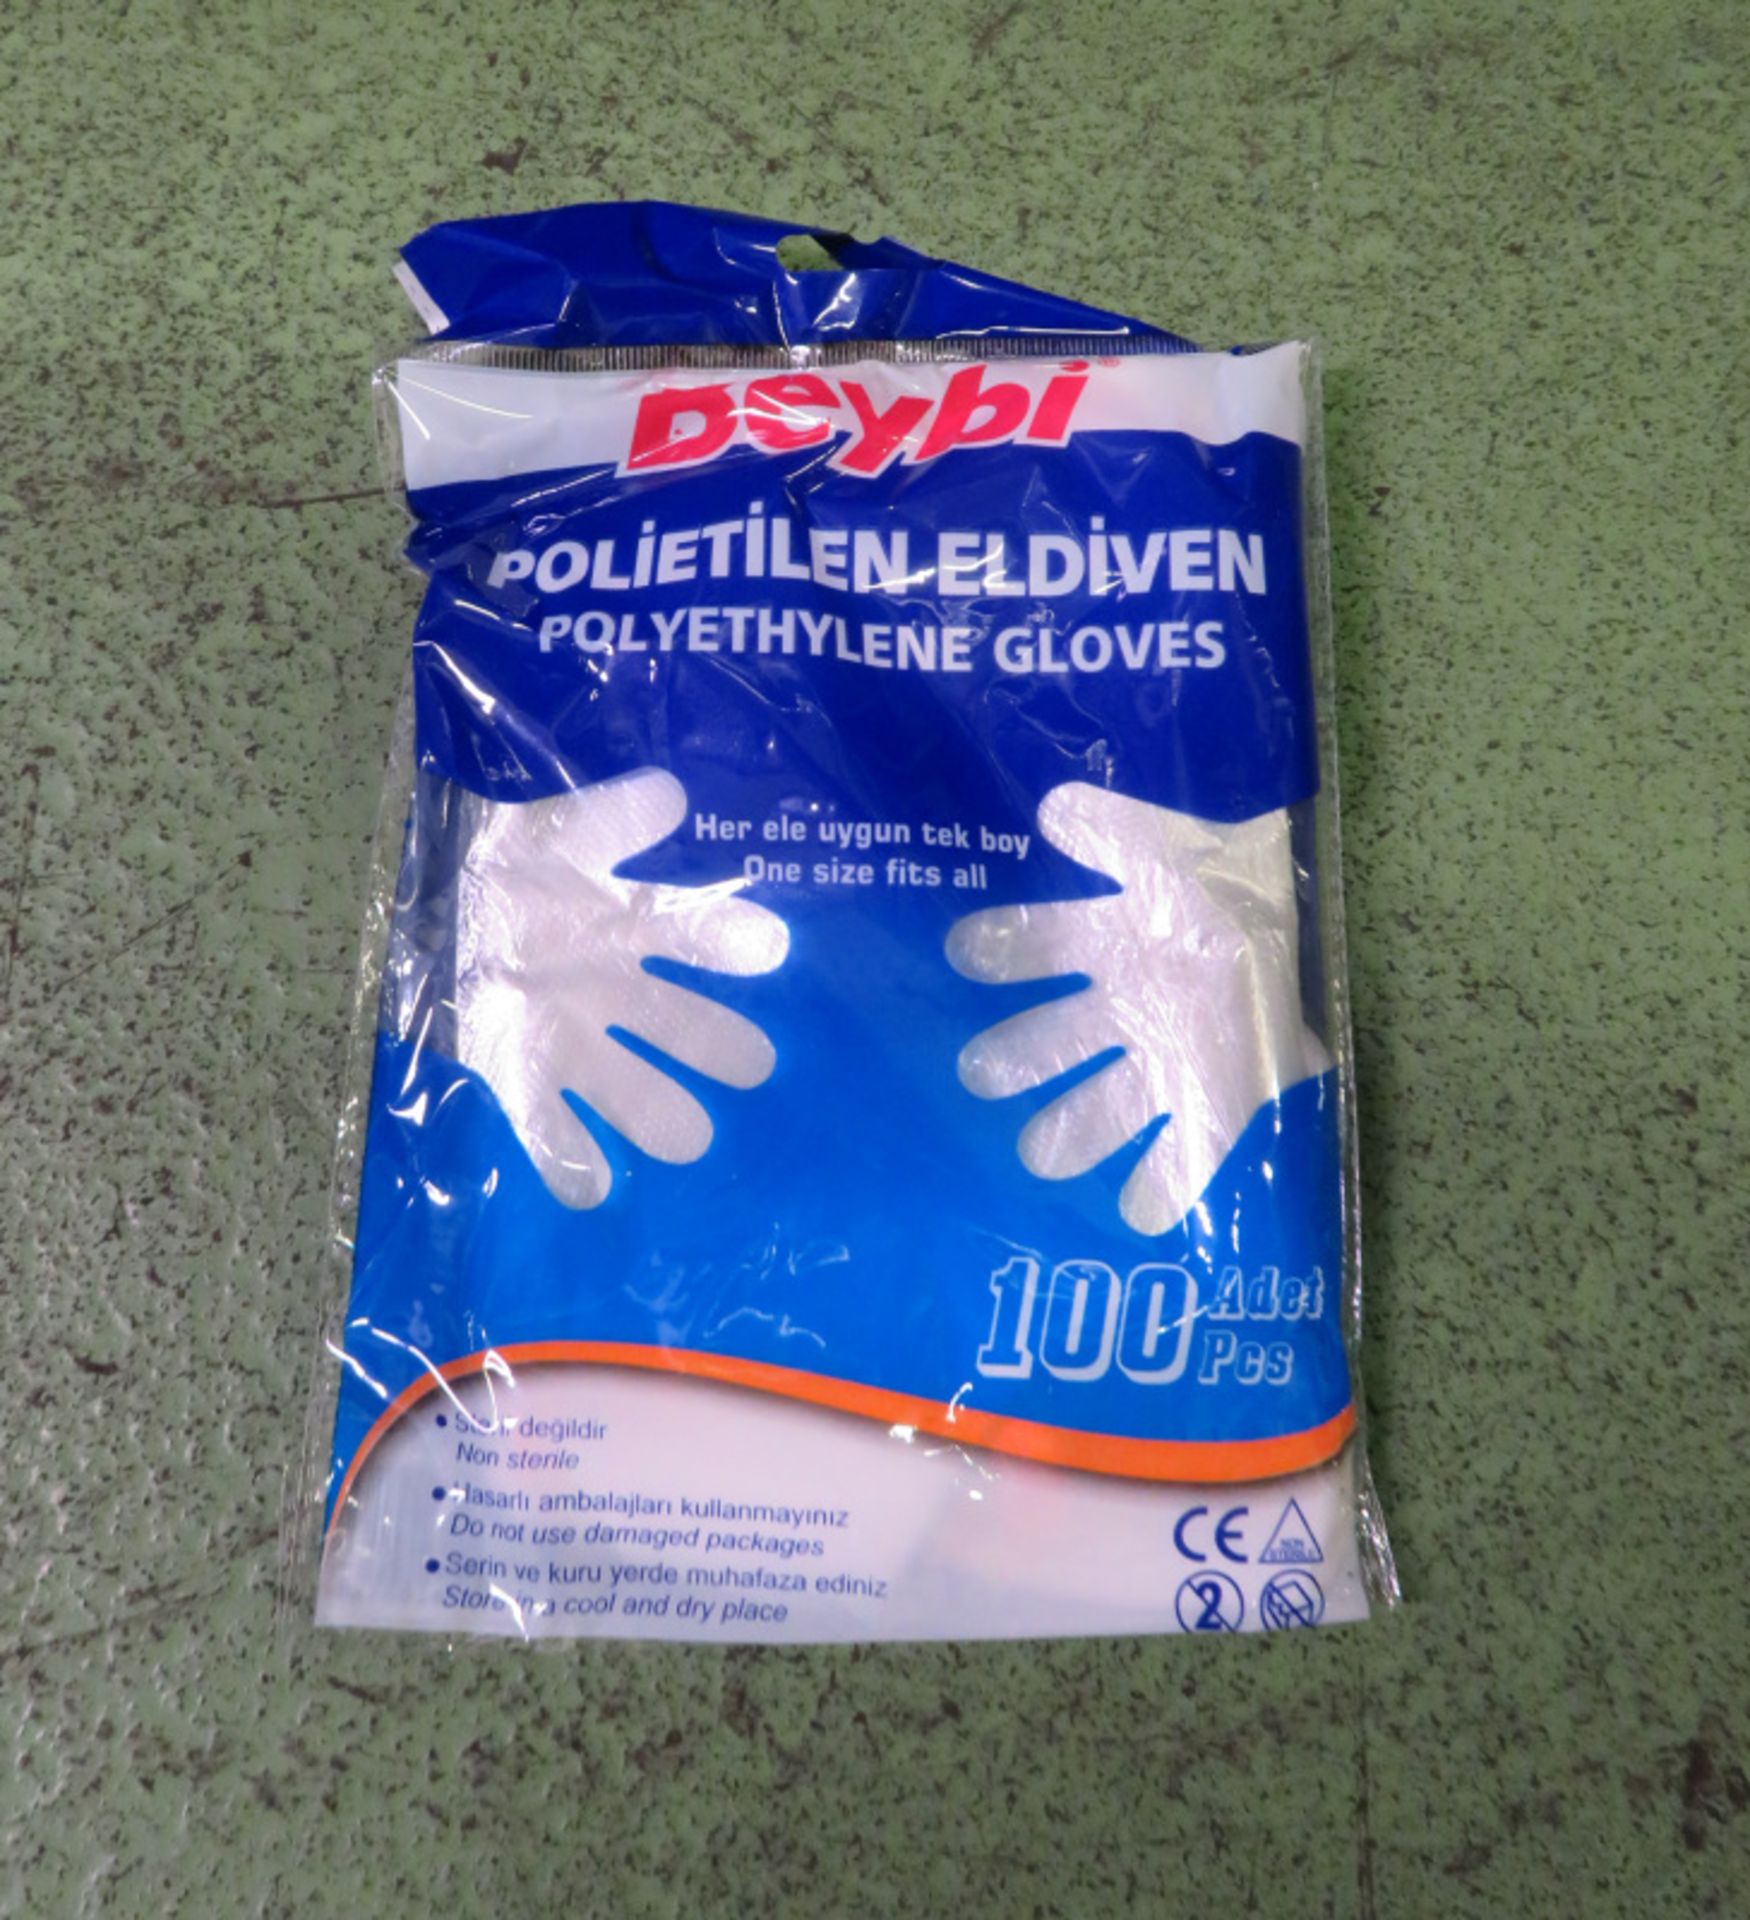 Beybi HDPE Gloves - Size L - 100 gloves per bag - 200 bags per box - 1 box - Image 2 of 2